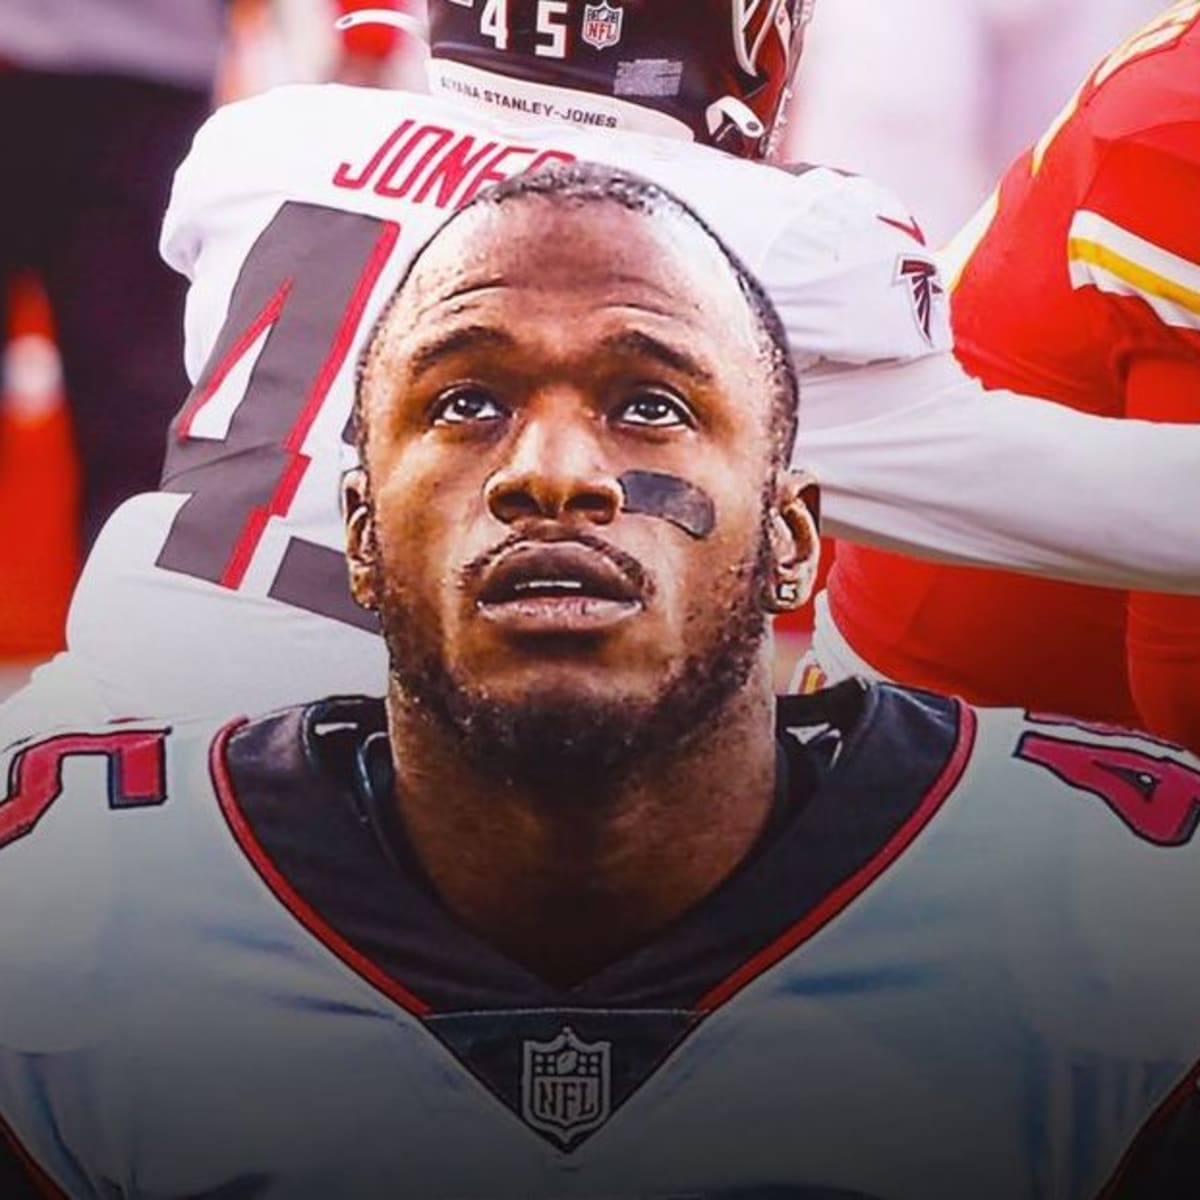 Atlanta Falcons BREAKING: LB Deion Jones Trade to Cleveland Browns - Sports  Illustrated Atlanta Falcons News, Analysis and More